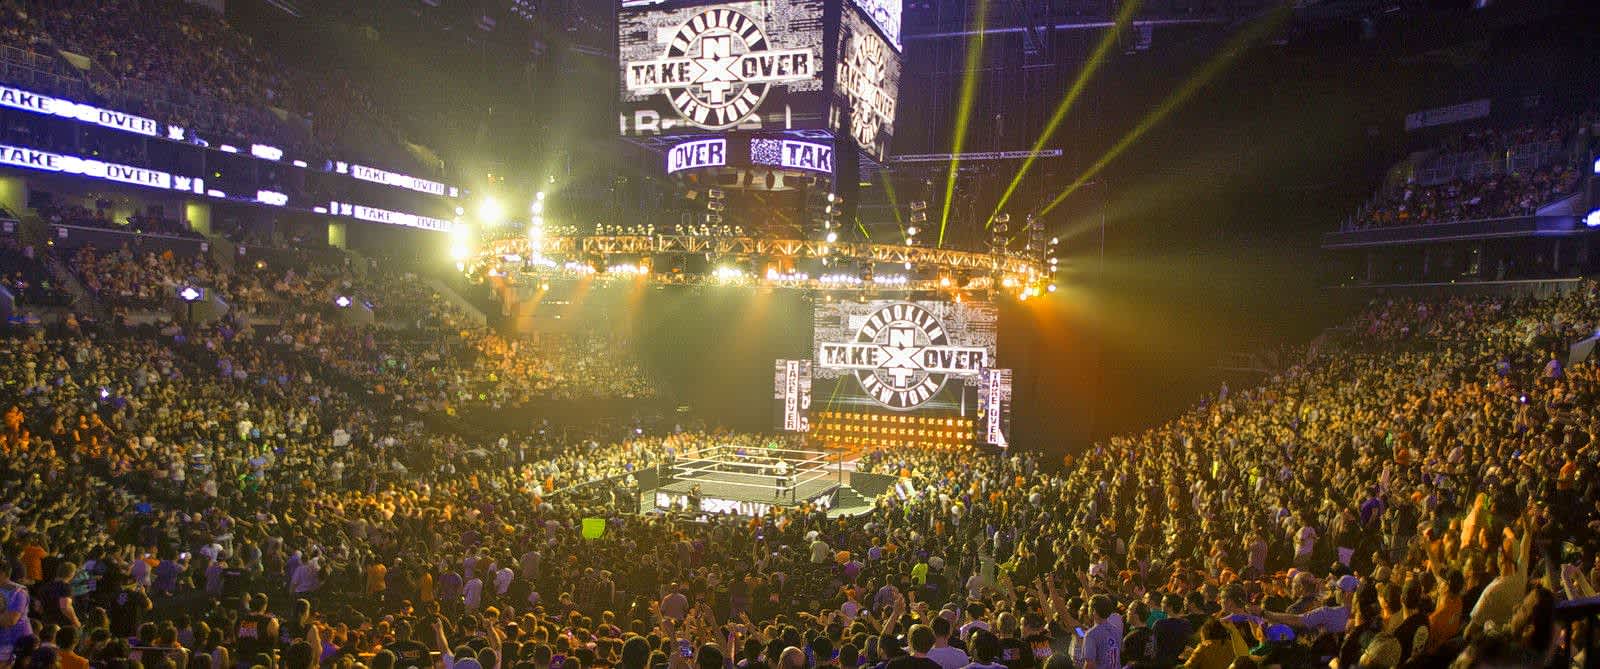 WWE NXT Atlanta [12/17/2020] at Center Stage Theatre Tickets StubHub!